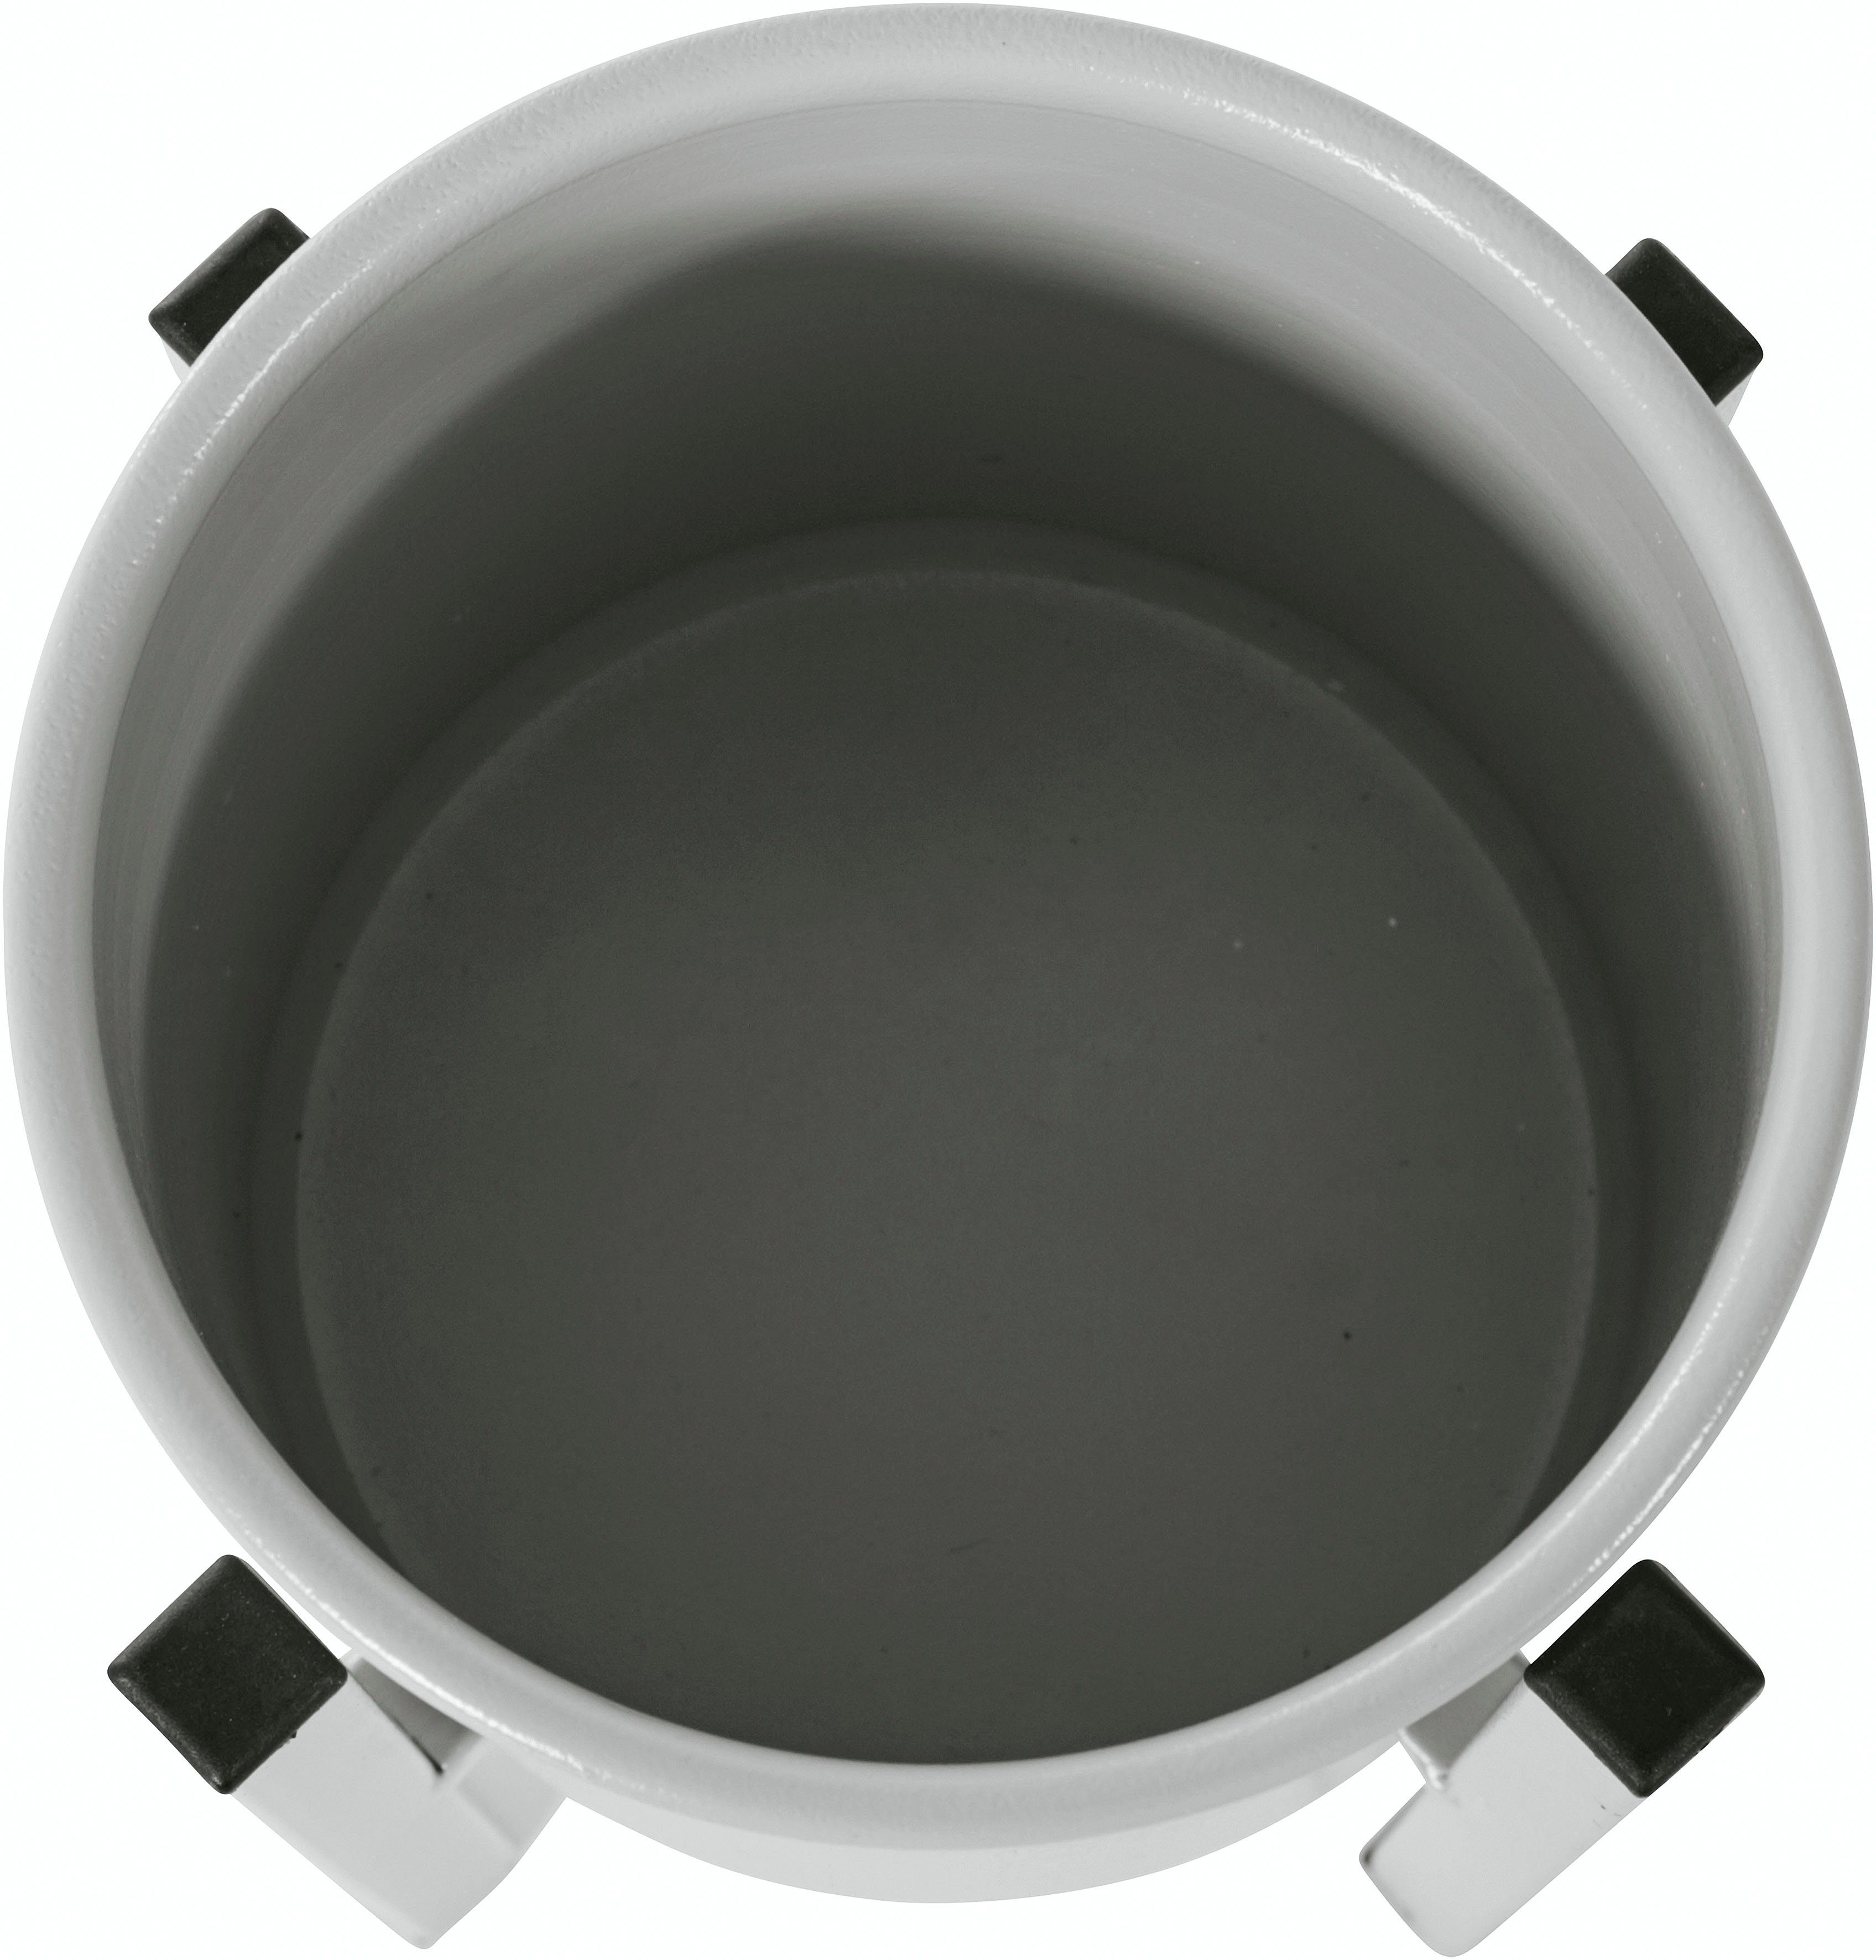 andas Übertopf Pajala (3er-Set), grau schwarz, aus Metall